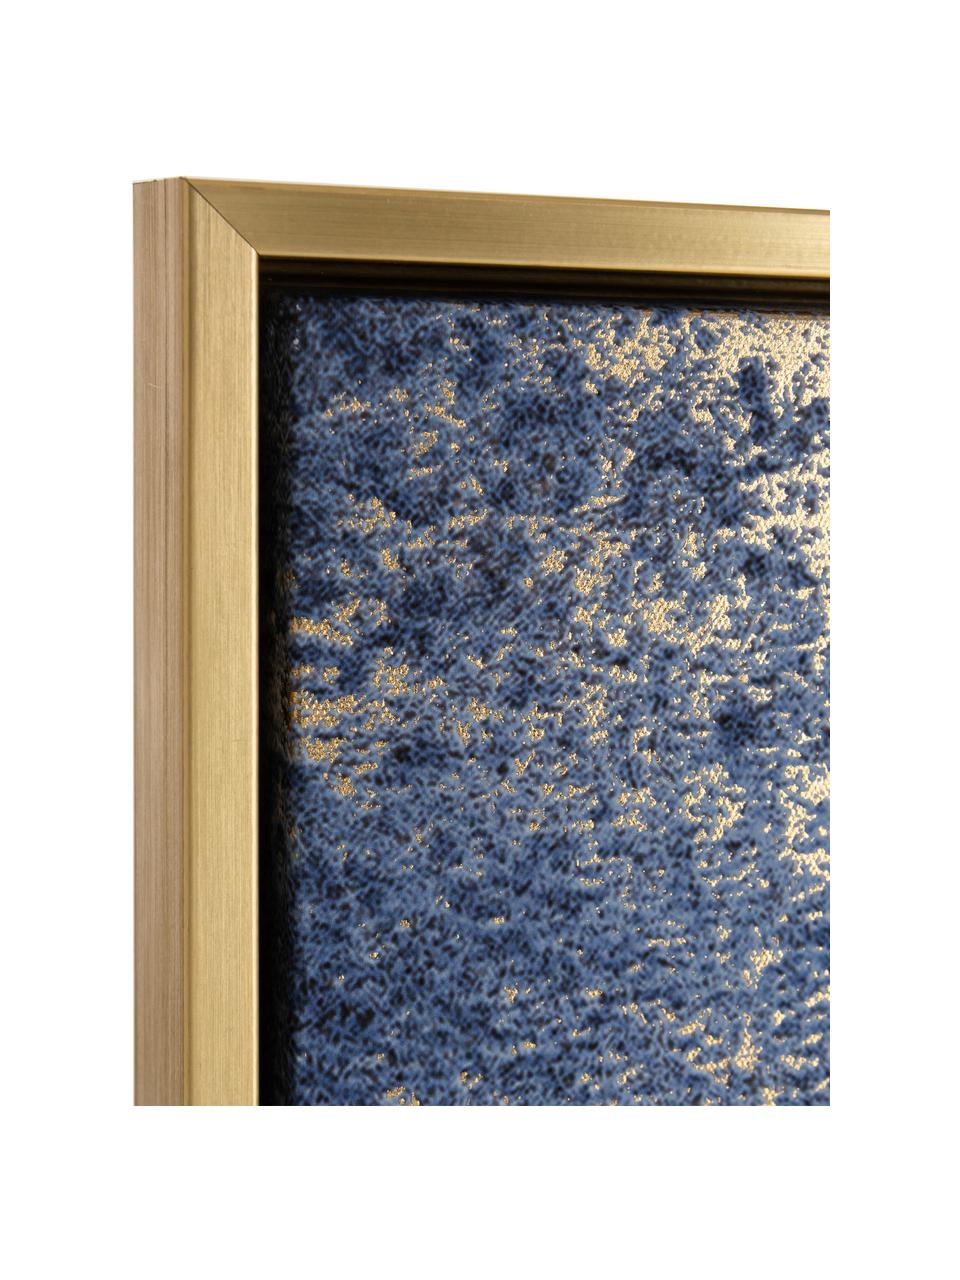 Leinwanddruck Strokes, Rahmen: Kiefernholz, Kunststoff, , Bild: Leinwand, Blau, Weiss, Goldfarben, 103 x 143 cm